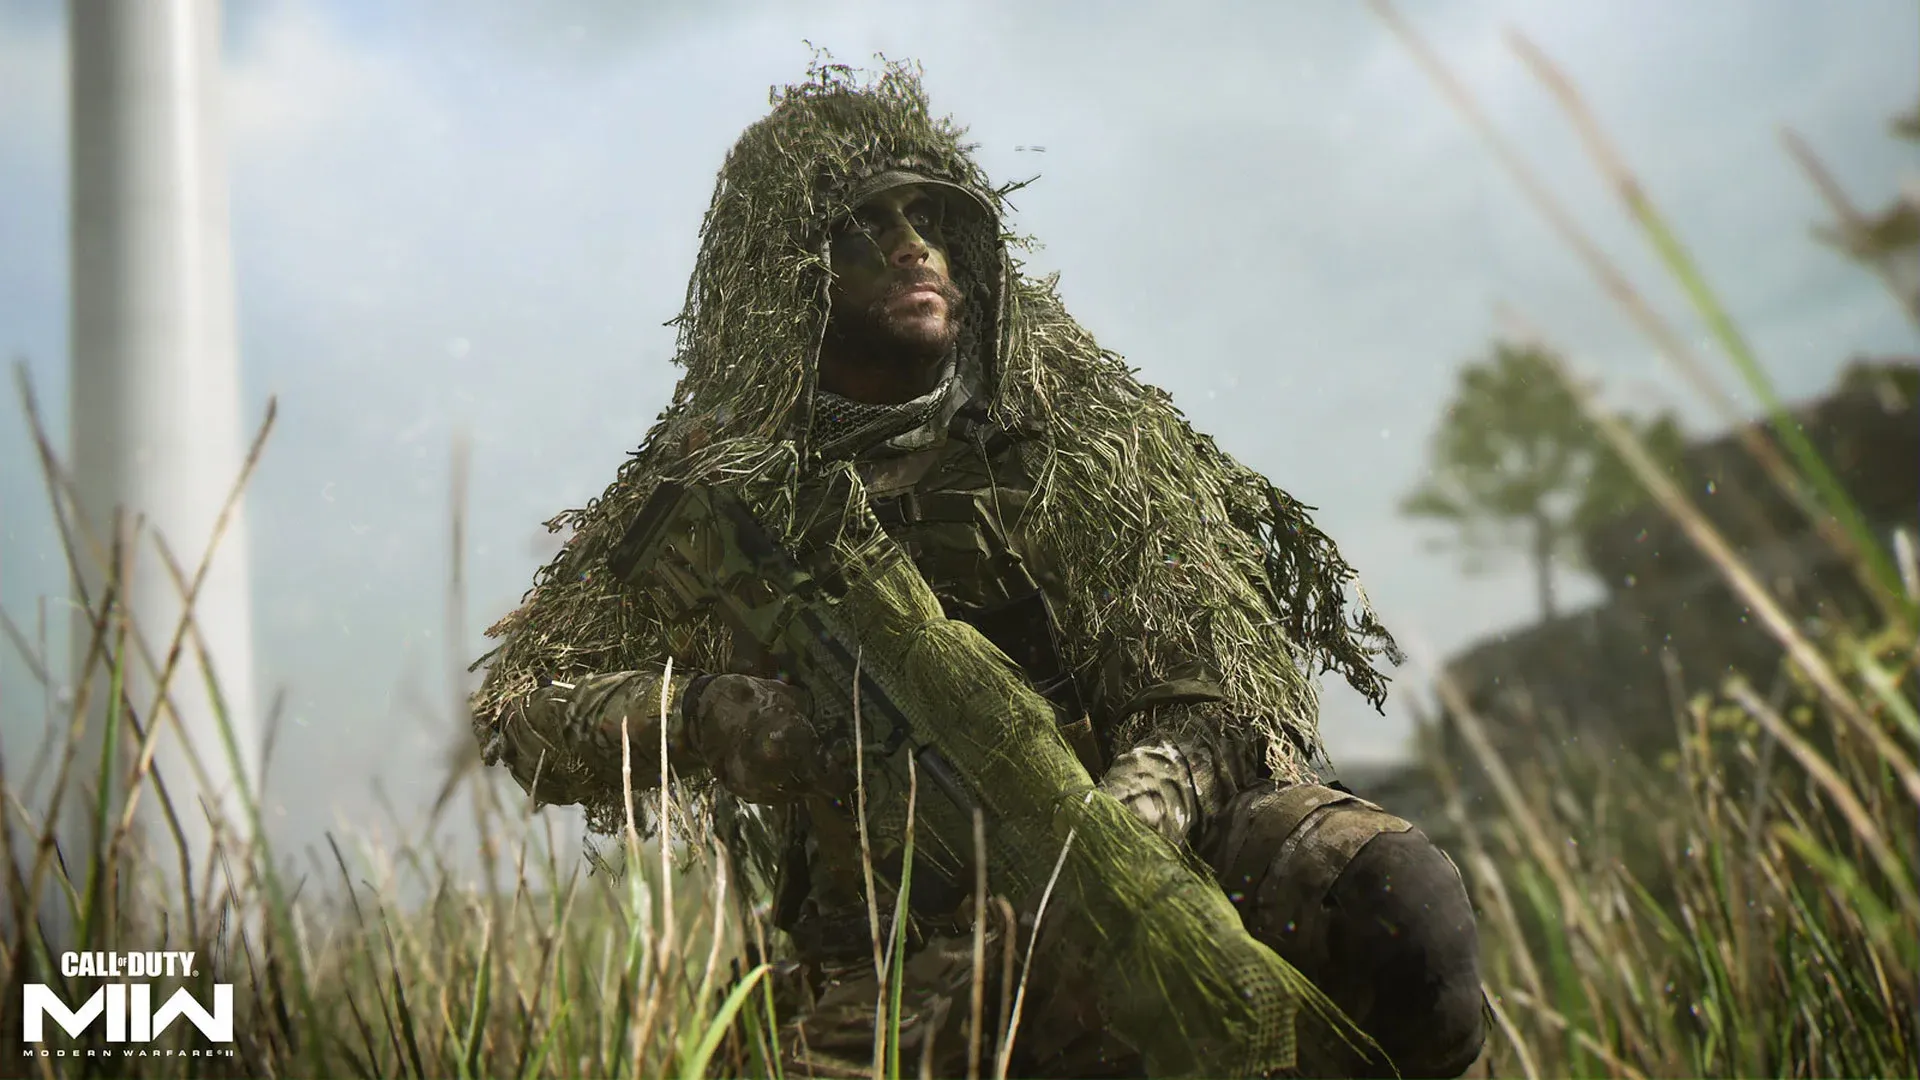 Requisitos mínimos para rodar Call of Duty: Modern Warfare no PC